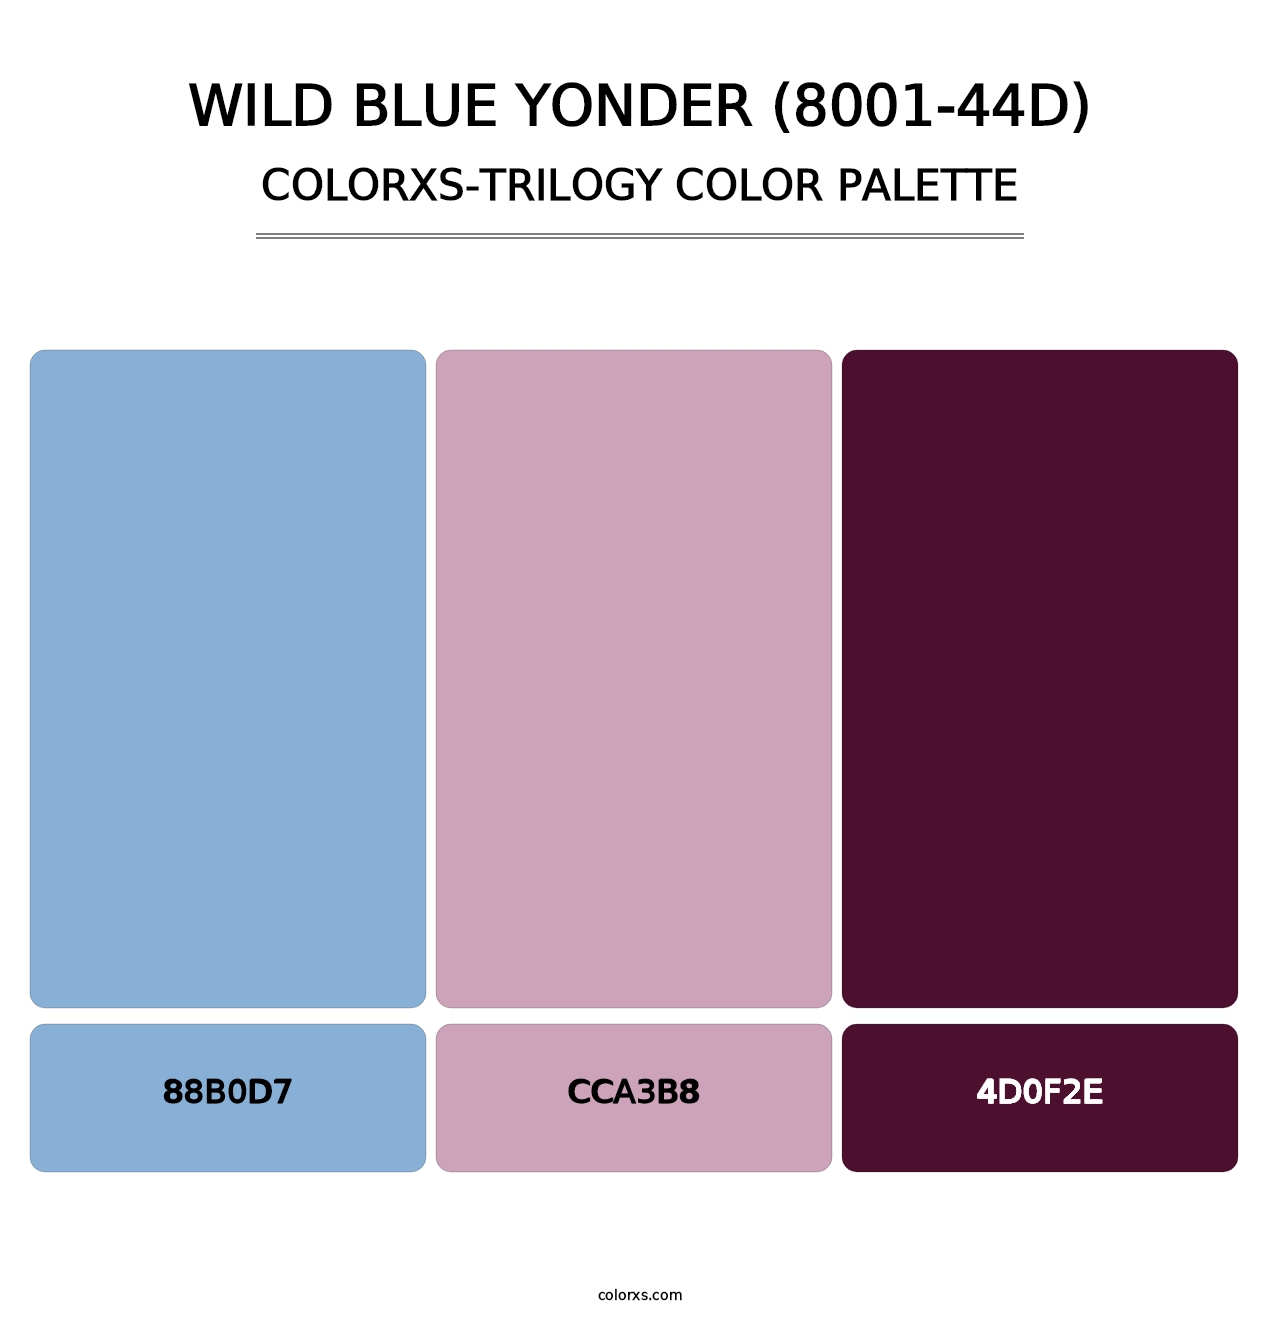 Wild Blue Yonder (8001-44D) - Colorxs Trilogy Palette